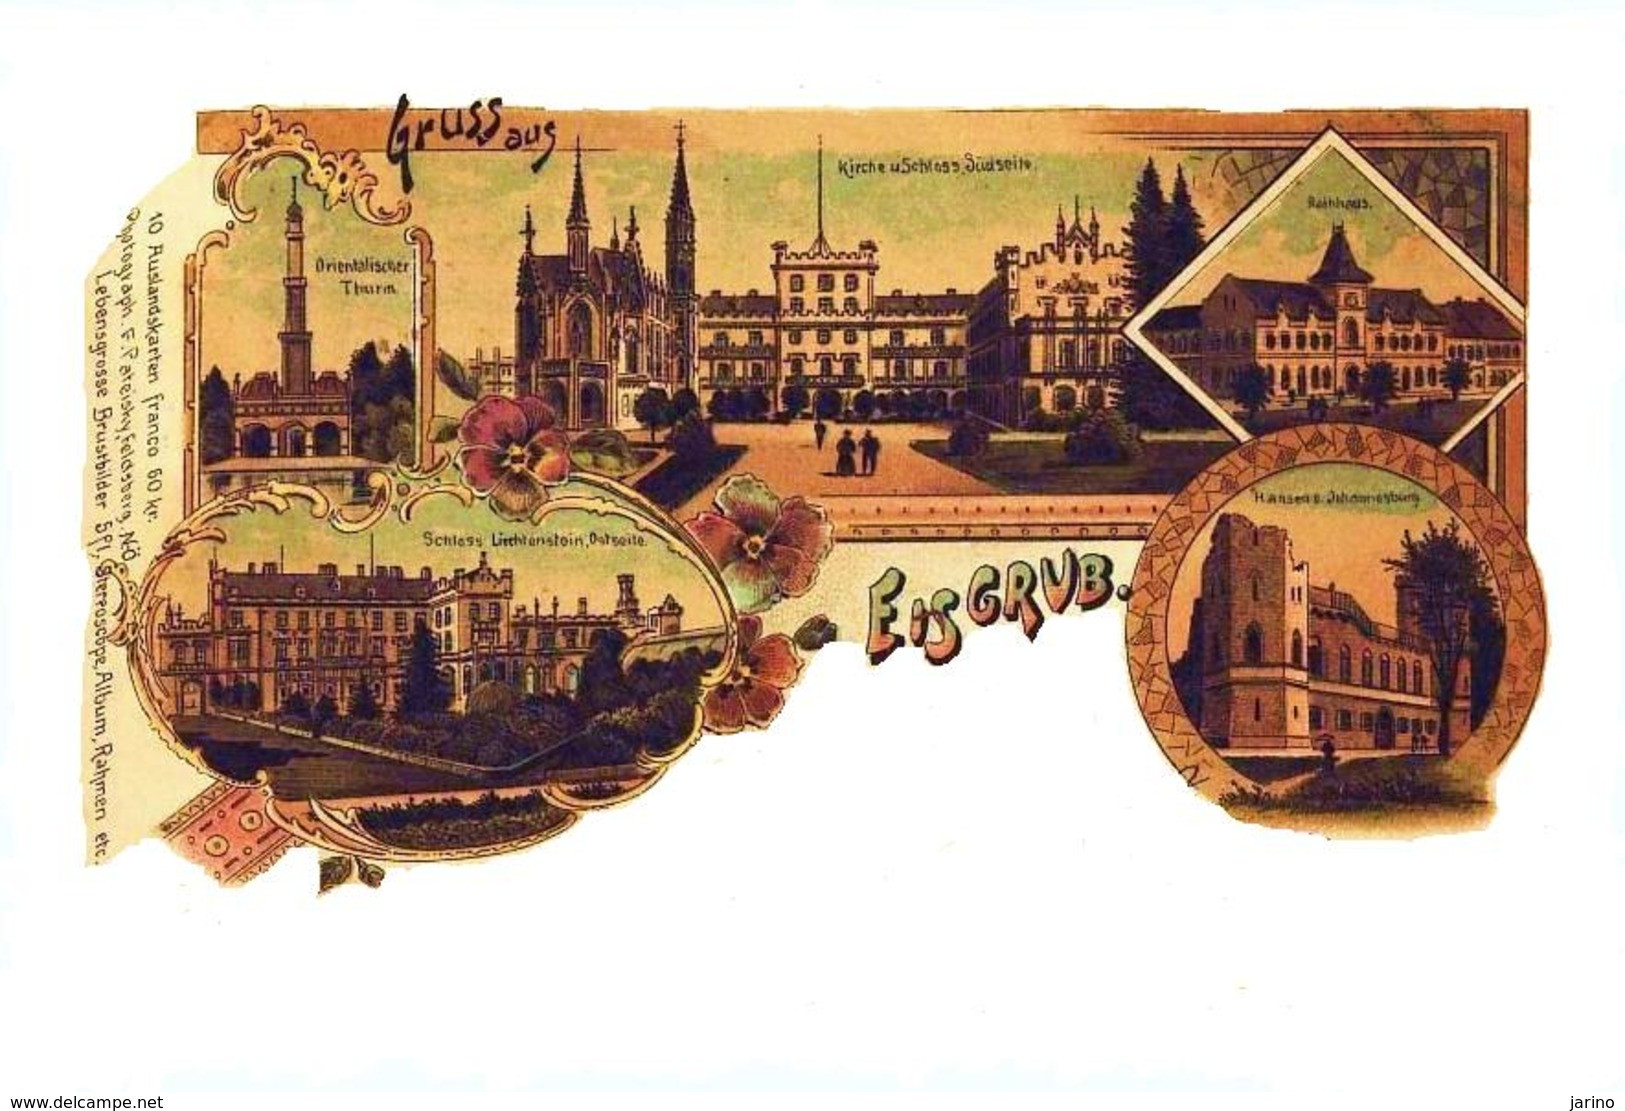 Lednice - Eisgrub 1899, Kreis - Okres: Breclav, Tschechische Republik, Litho, Reproduction - Repubblica Ceca